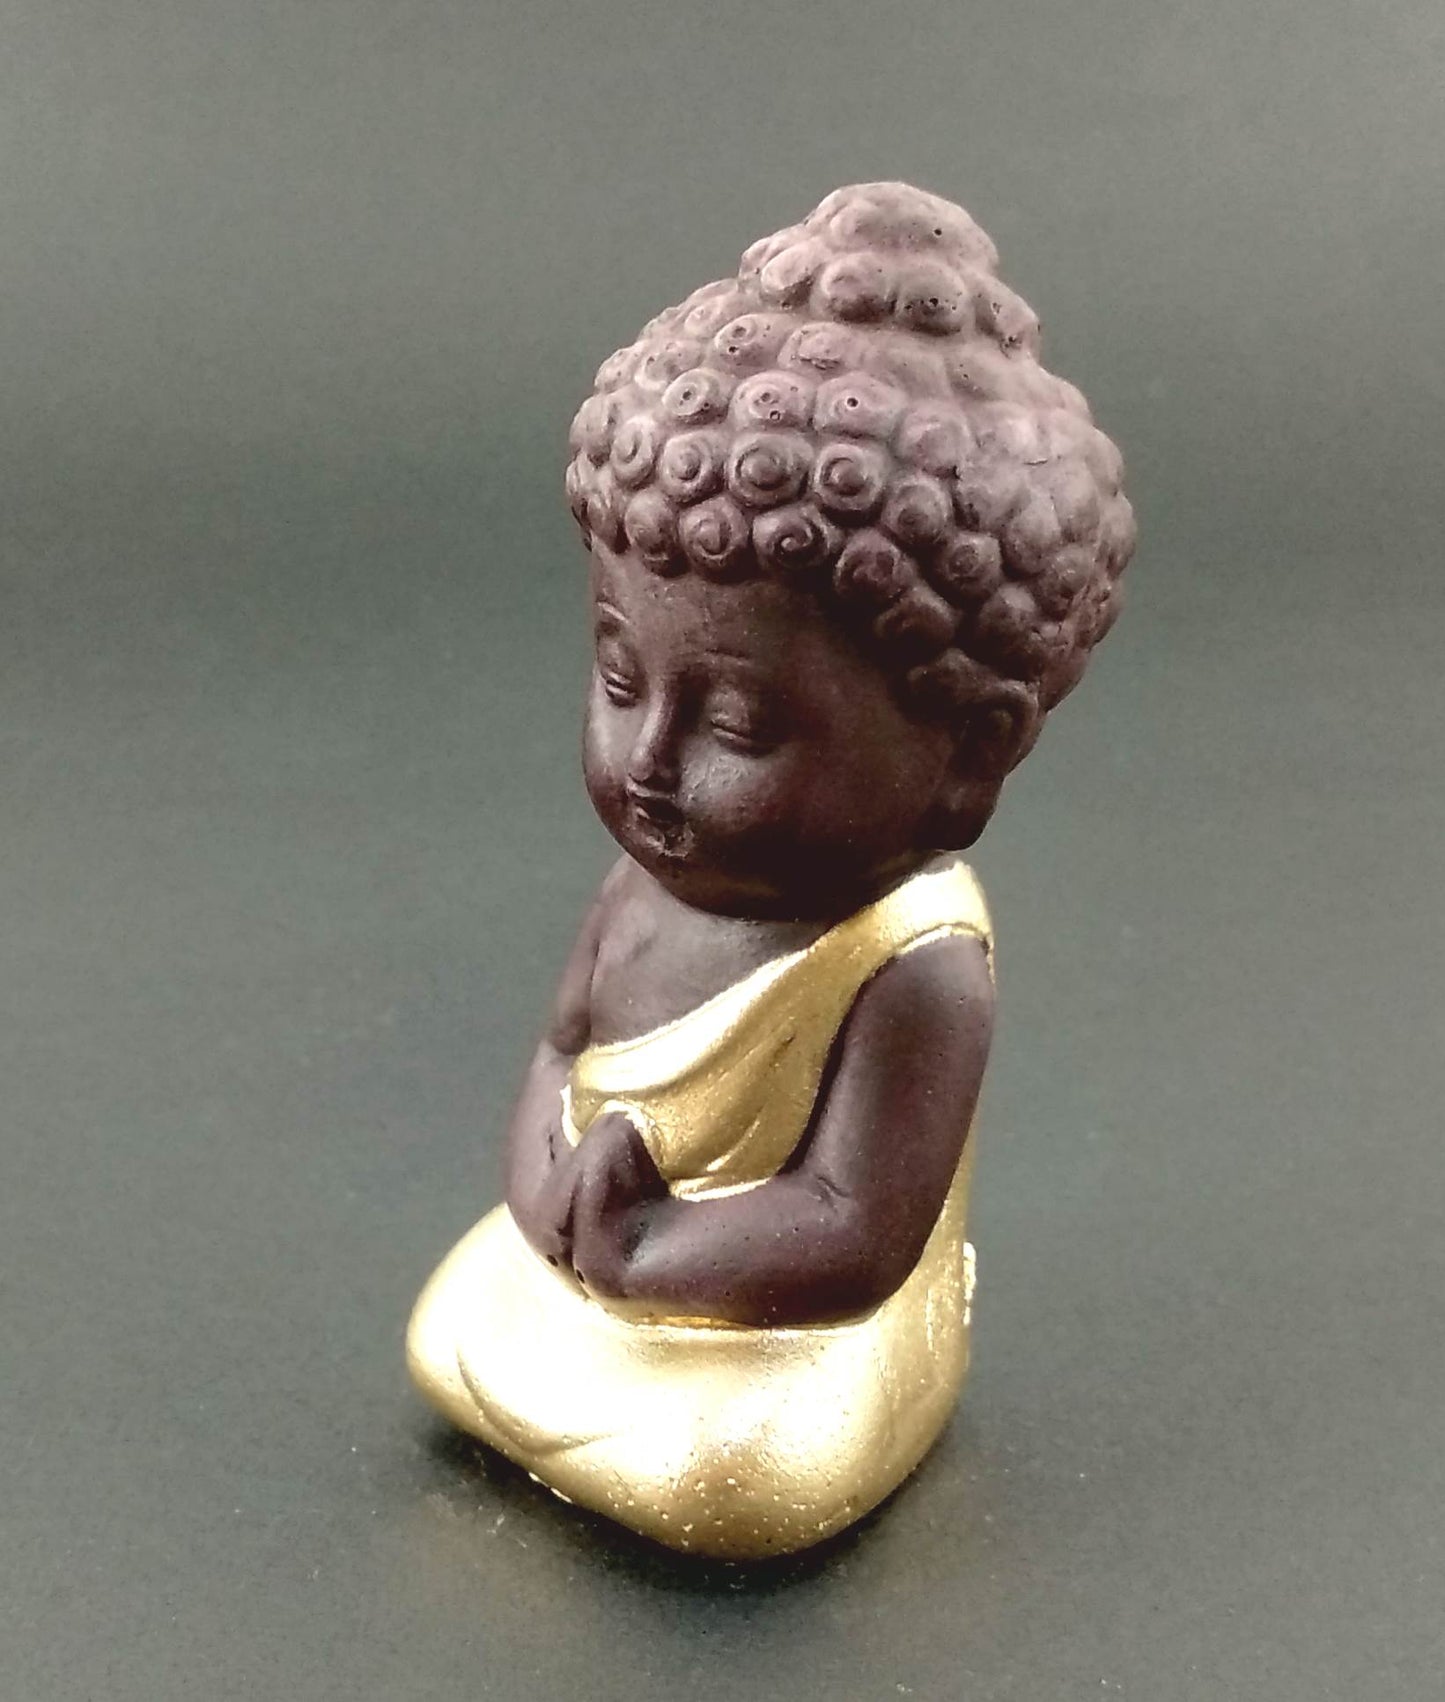 Brown Base Set of 2 Miniature Buddha Golden and Blue - Deczo